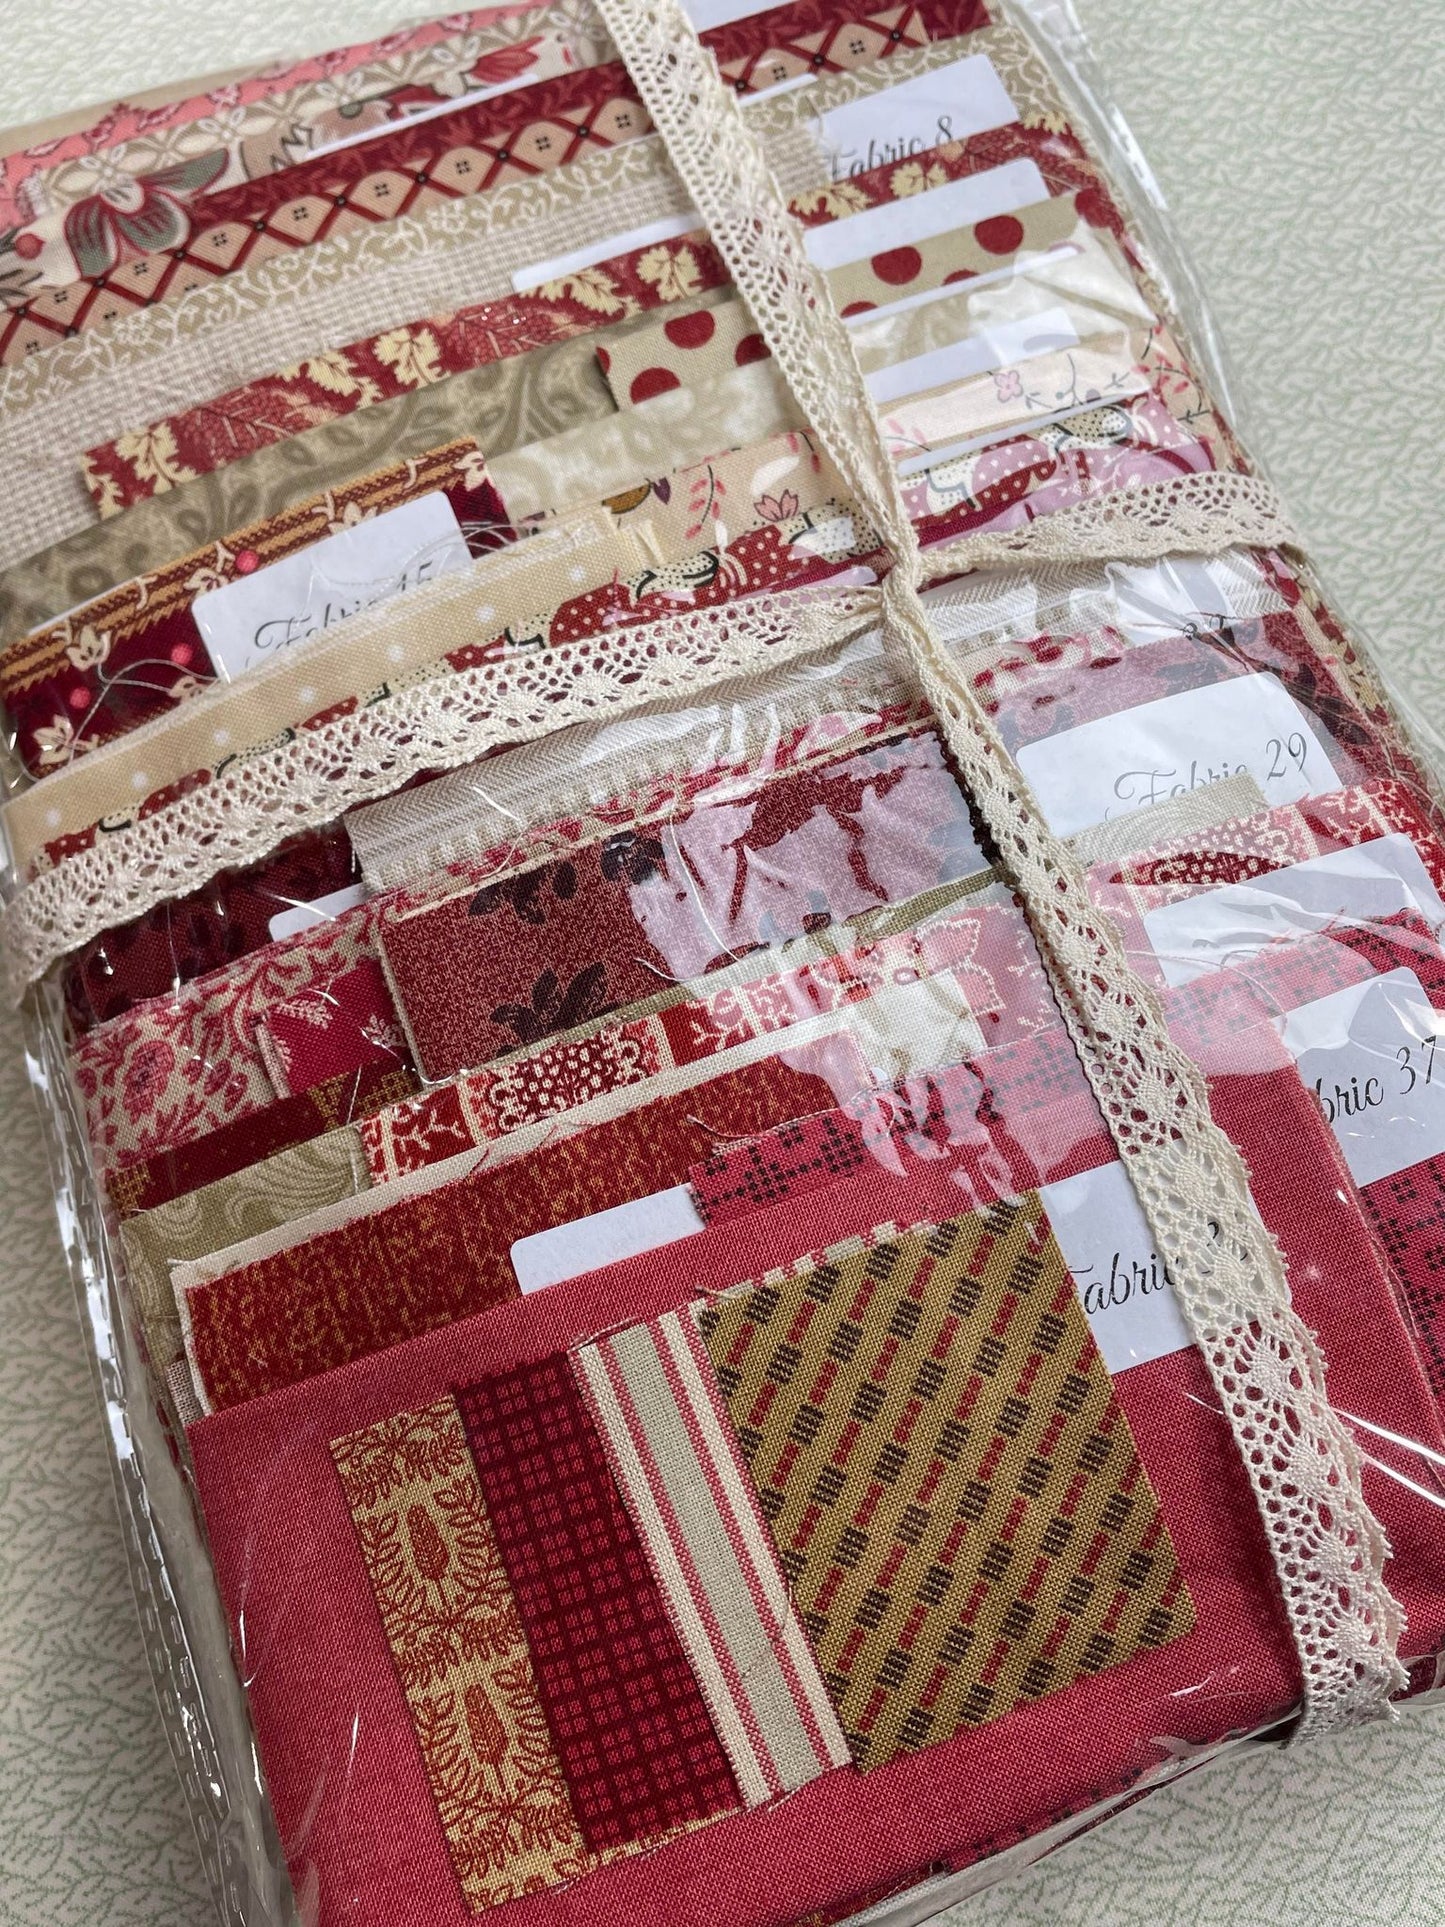 Vintage Treasures pattern and fabric kit